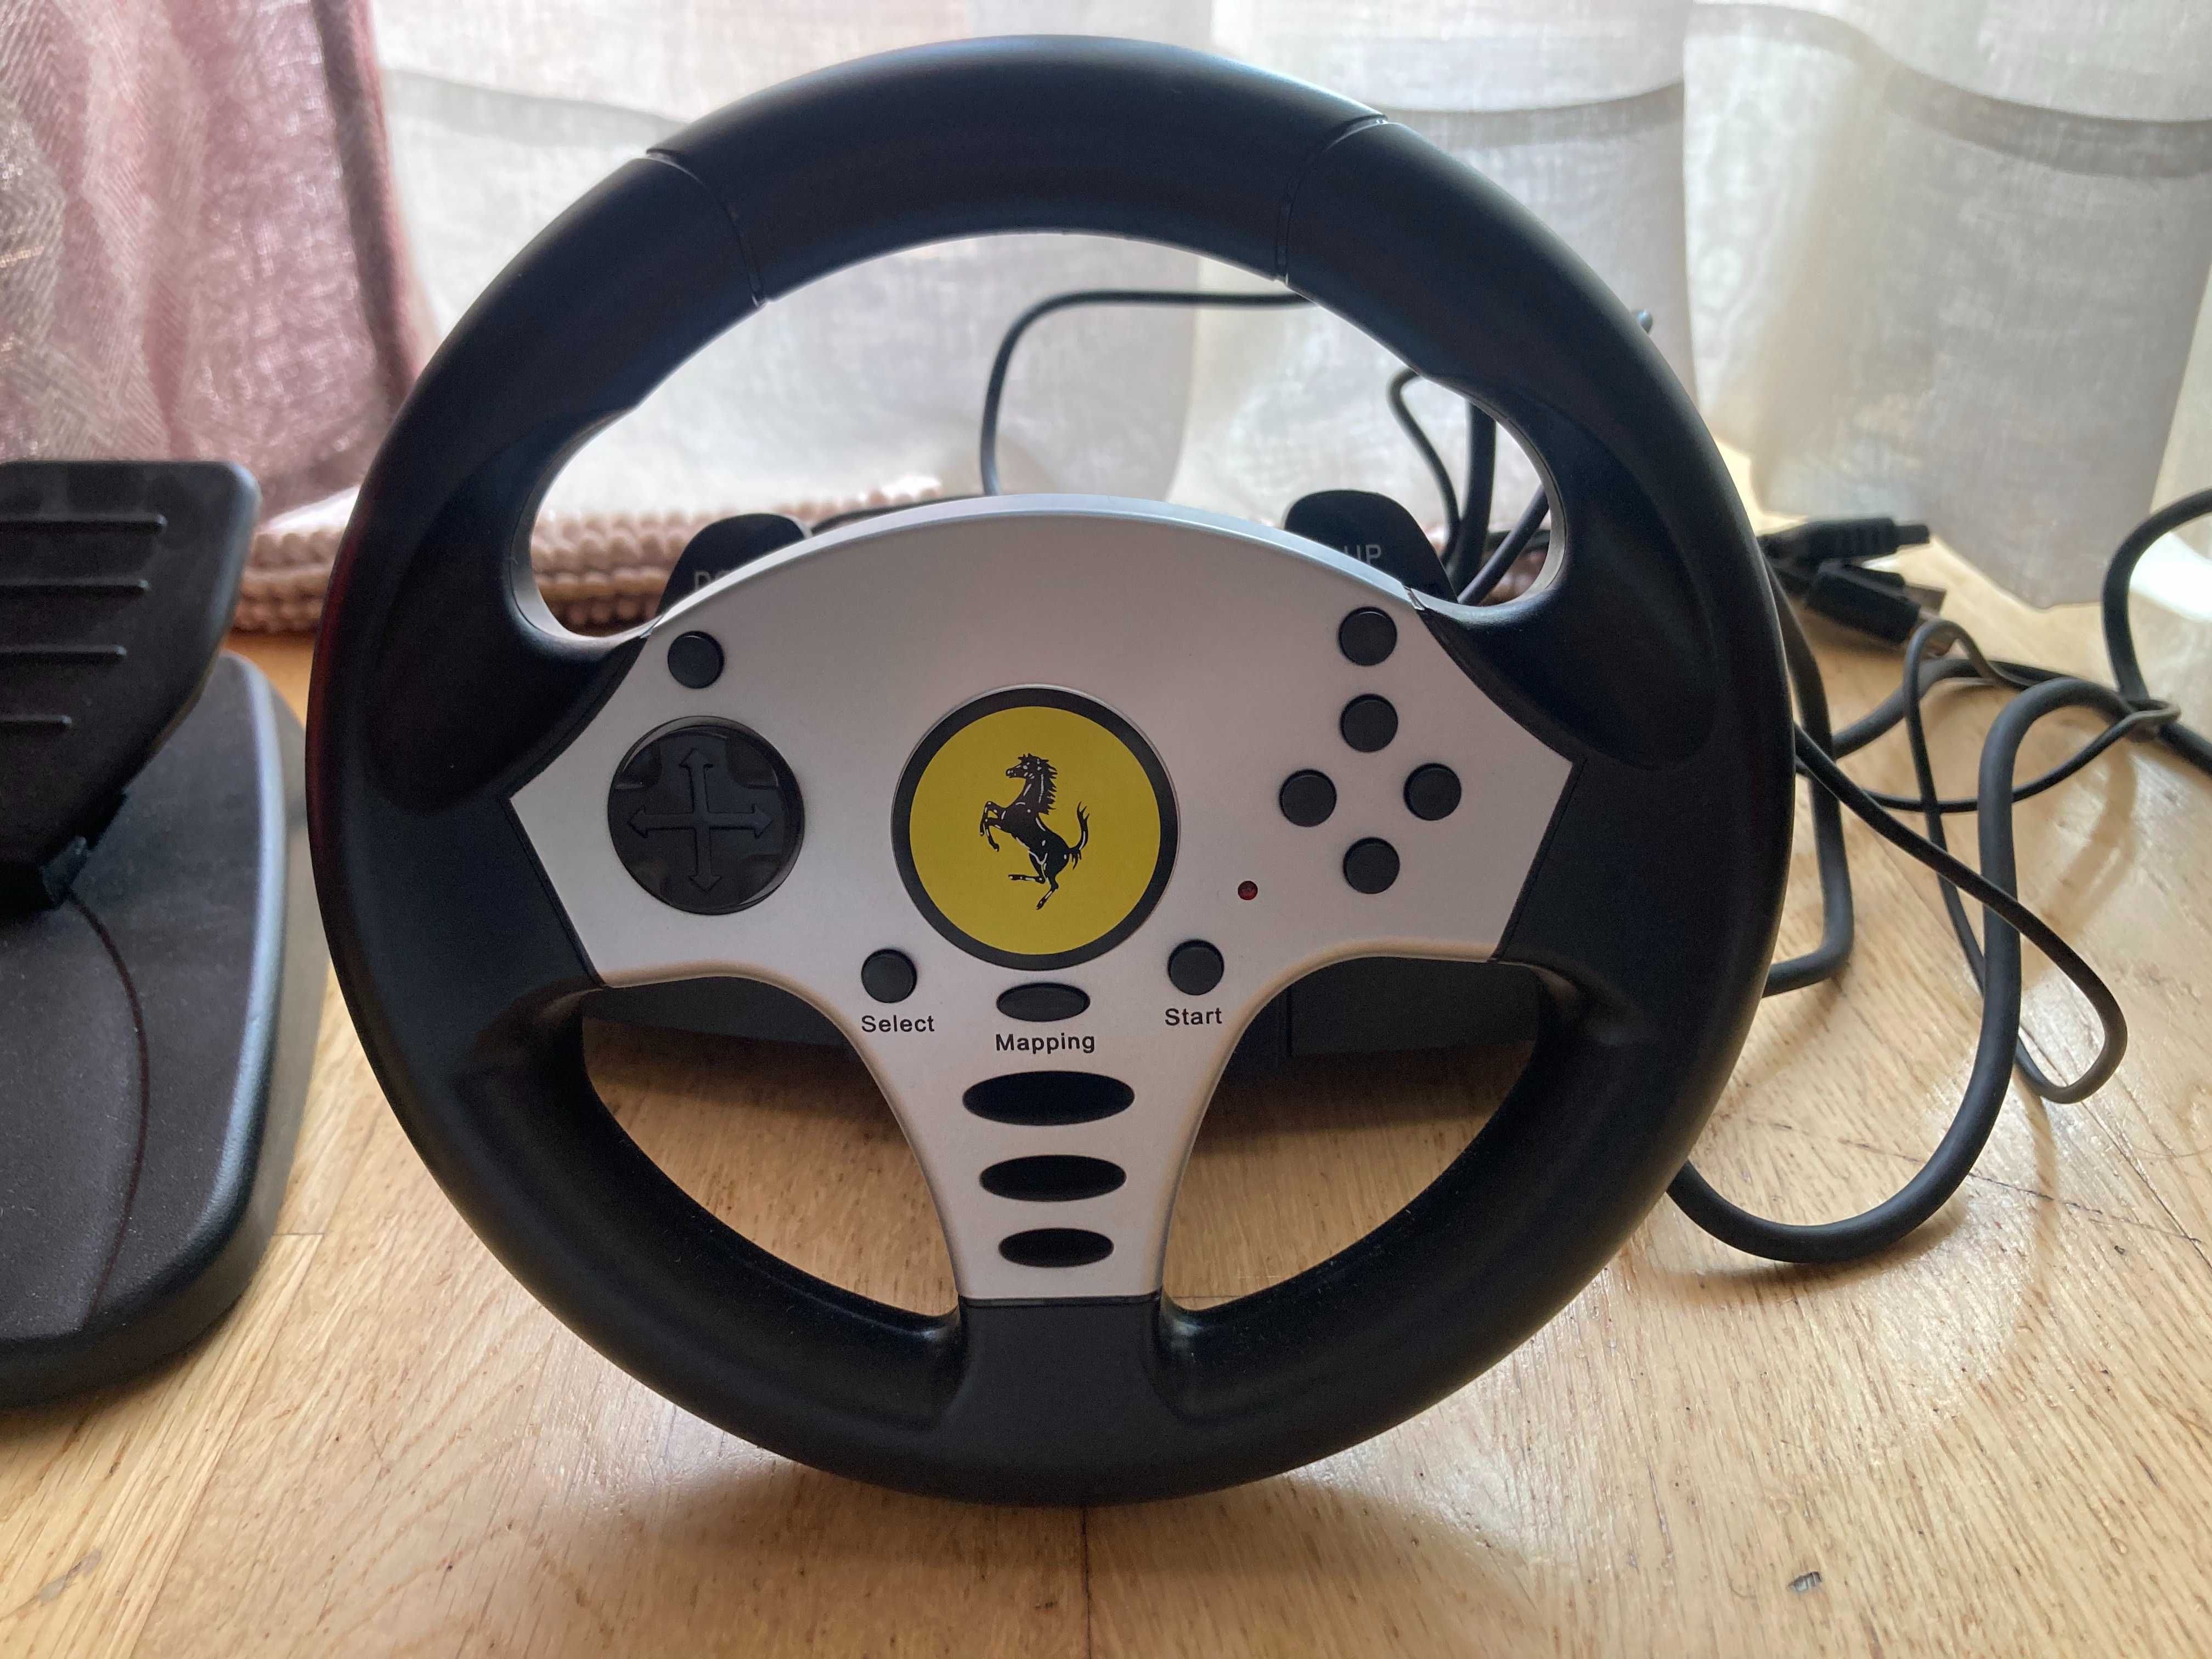 Ferrari Thrustmaster wheel for PC, PS3, PS2 e Wii